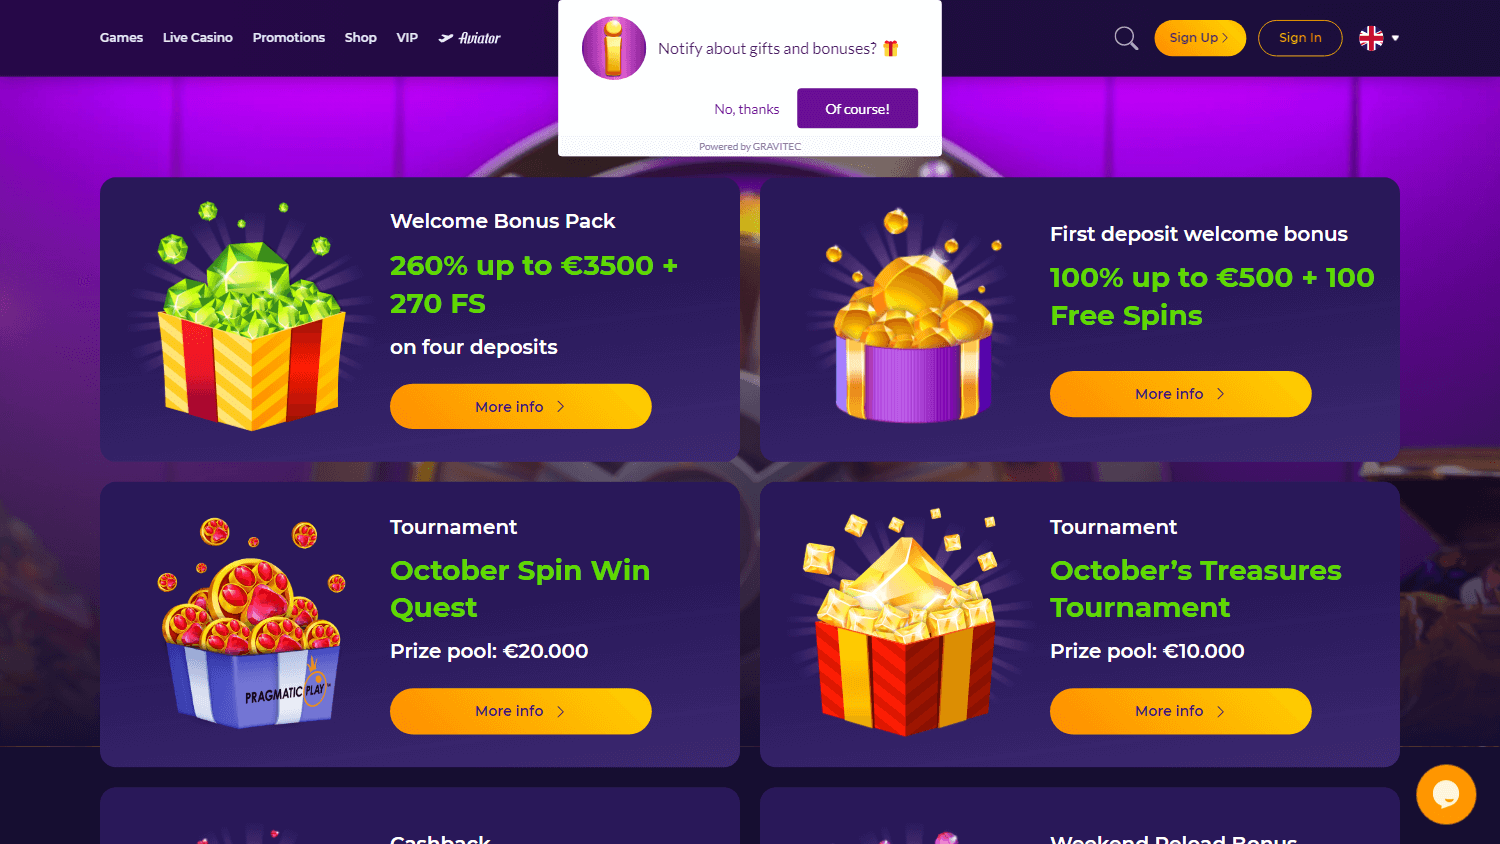 iwild_casino_promotions_desktop